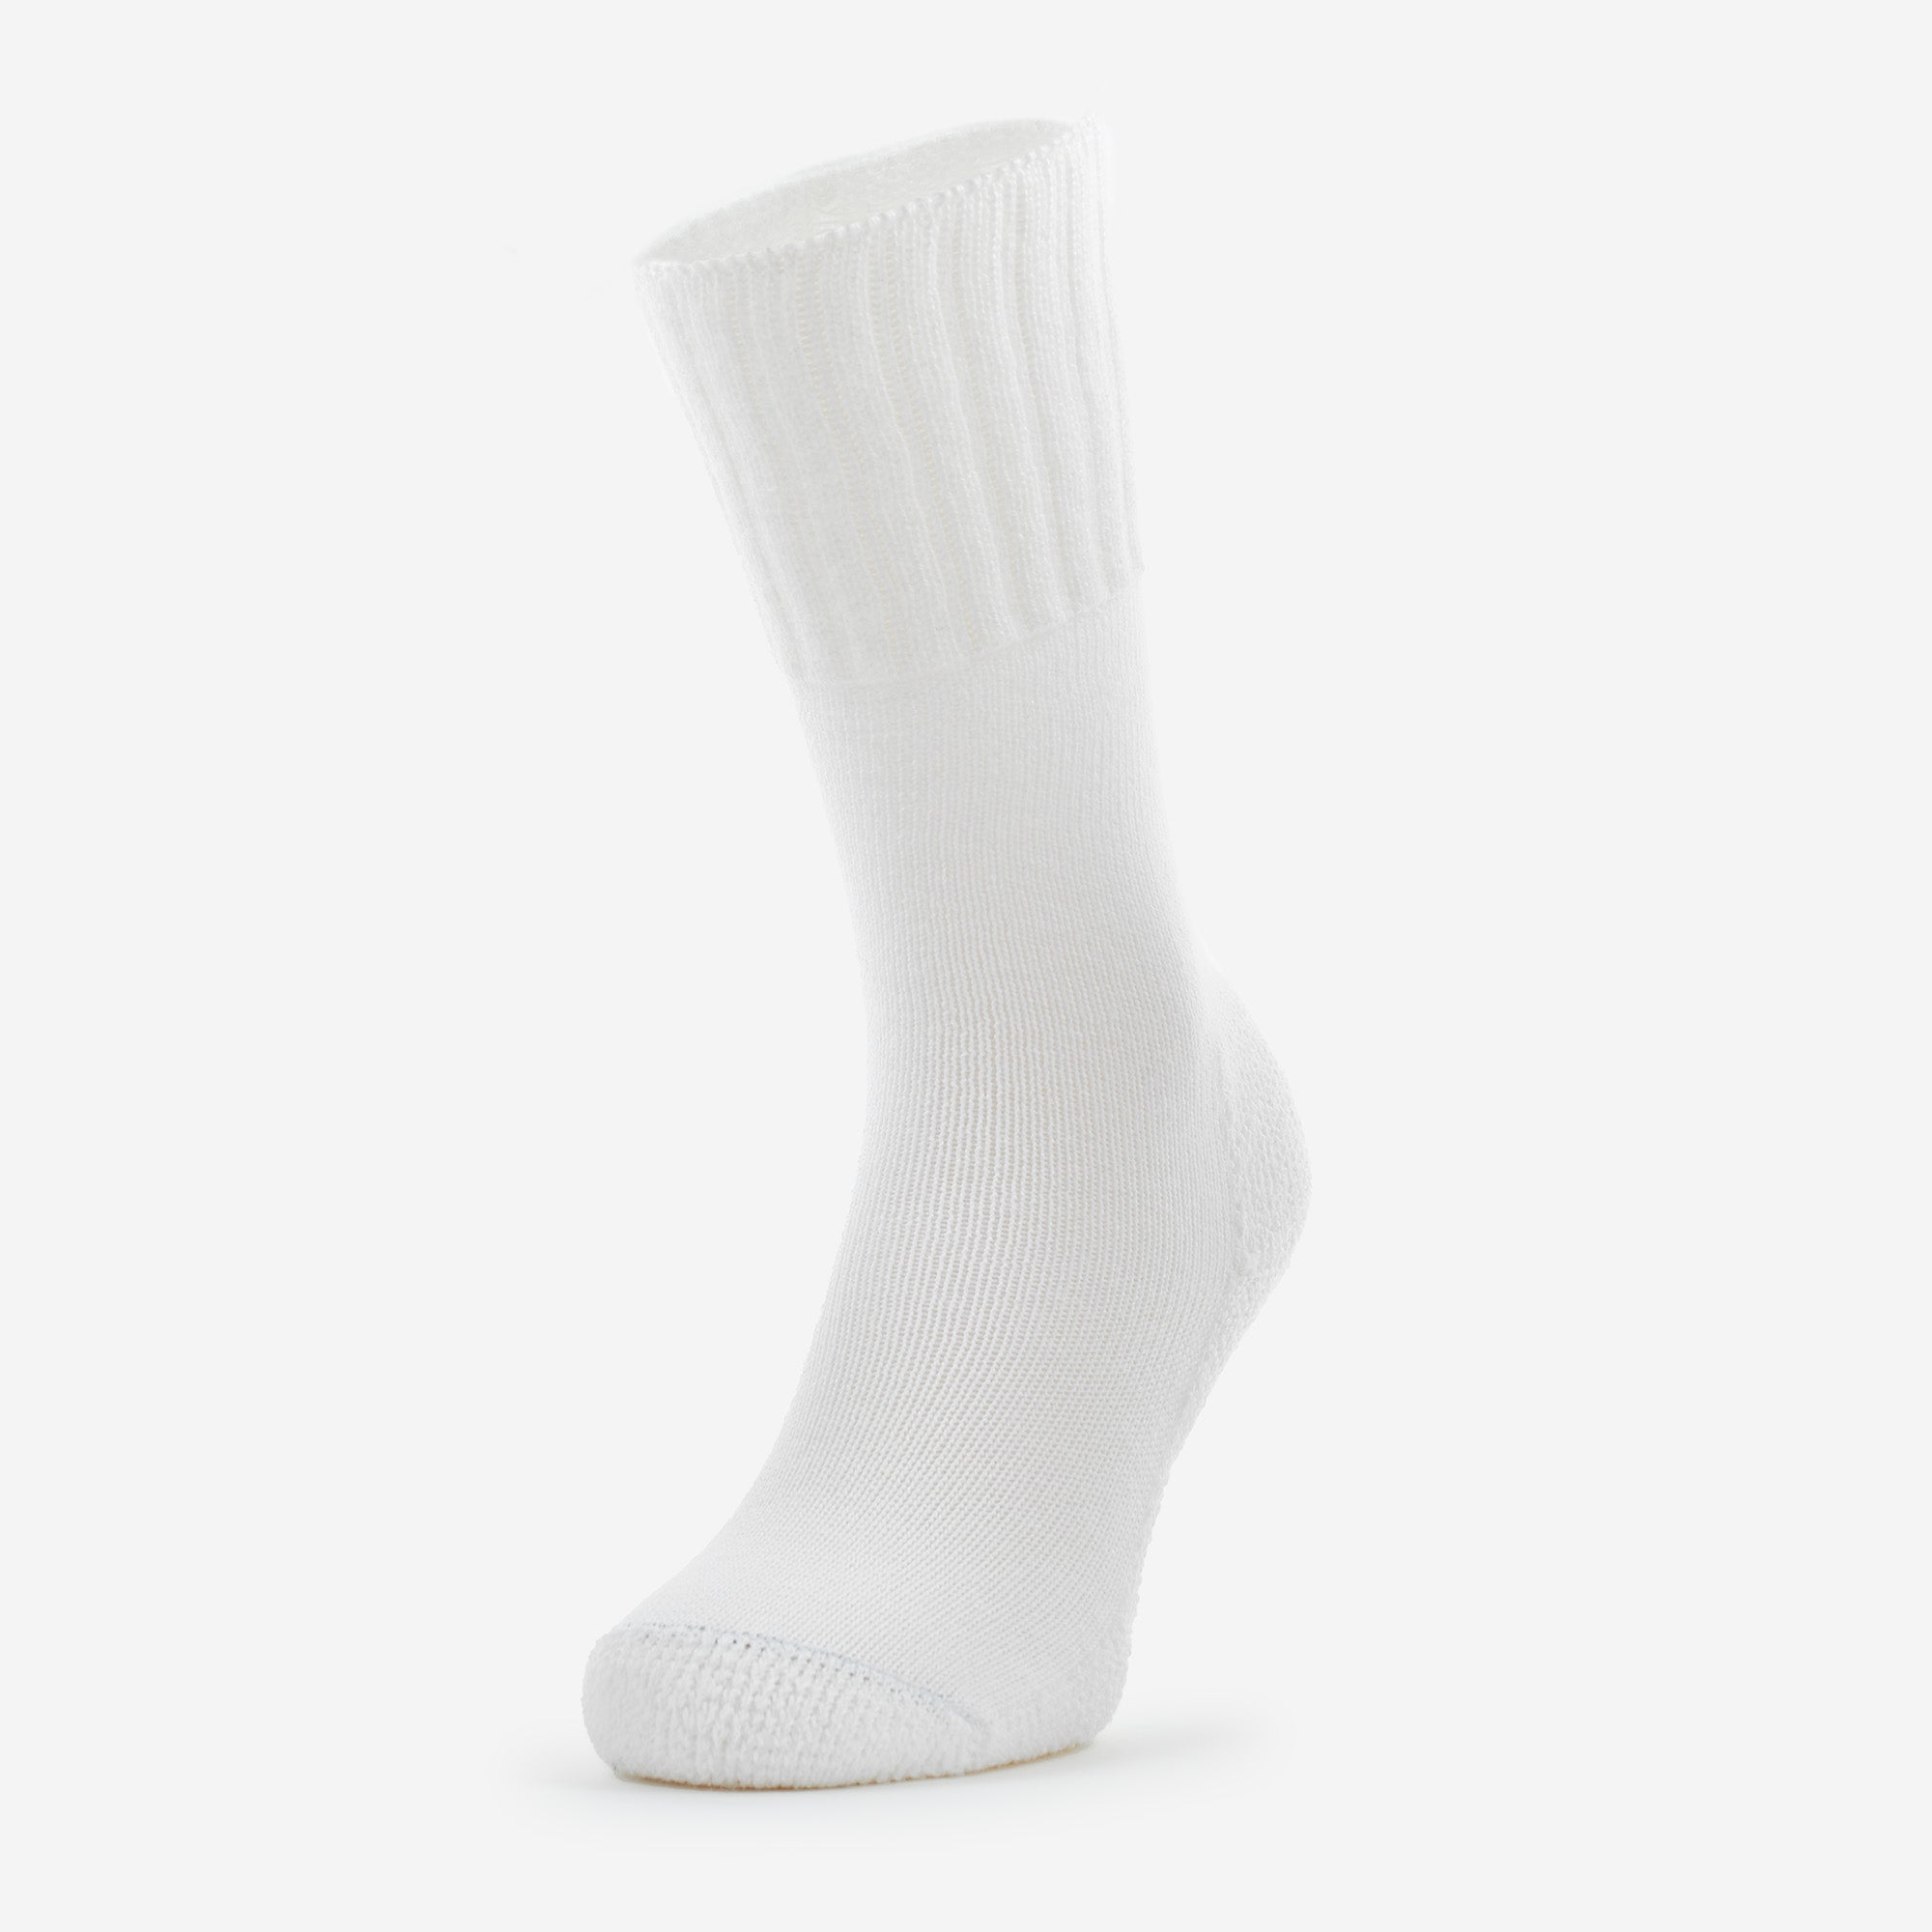 TOETOE® Socks - Mid-Calf Toe Socks White Unisize